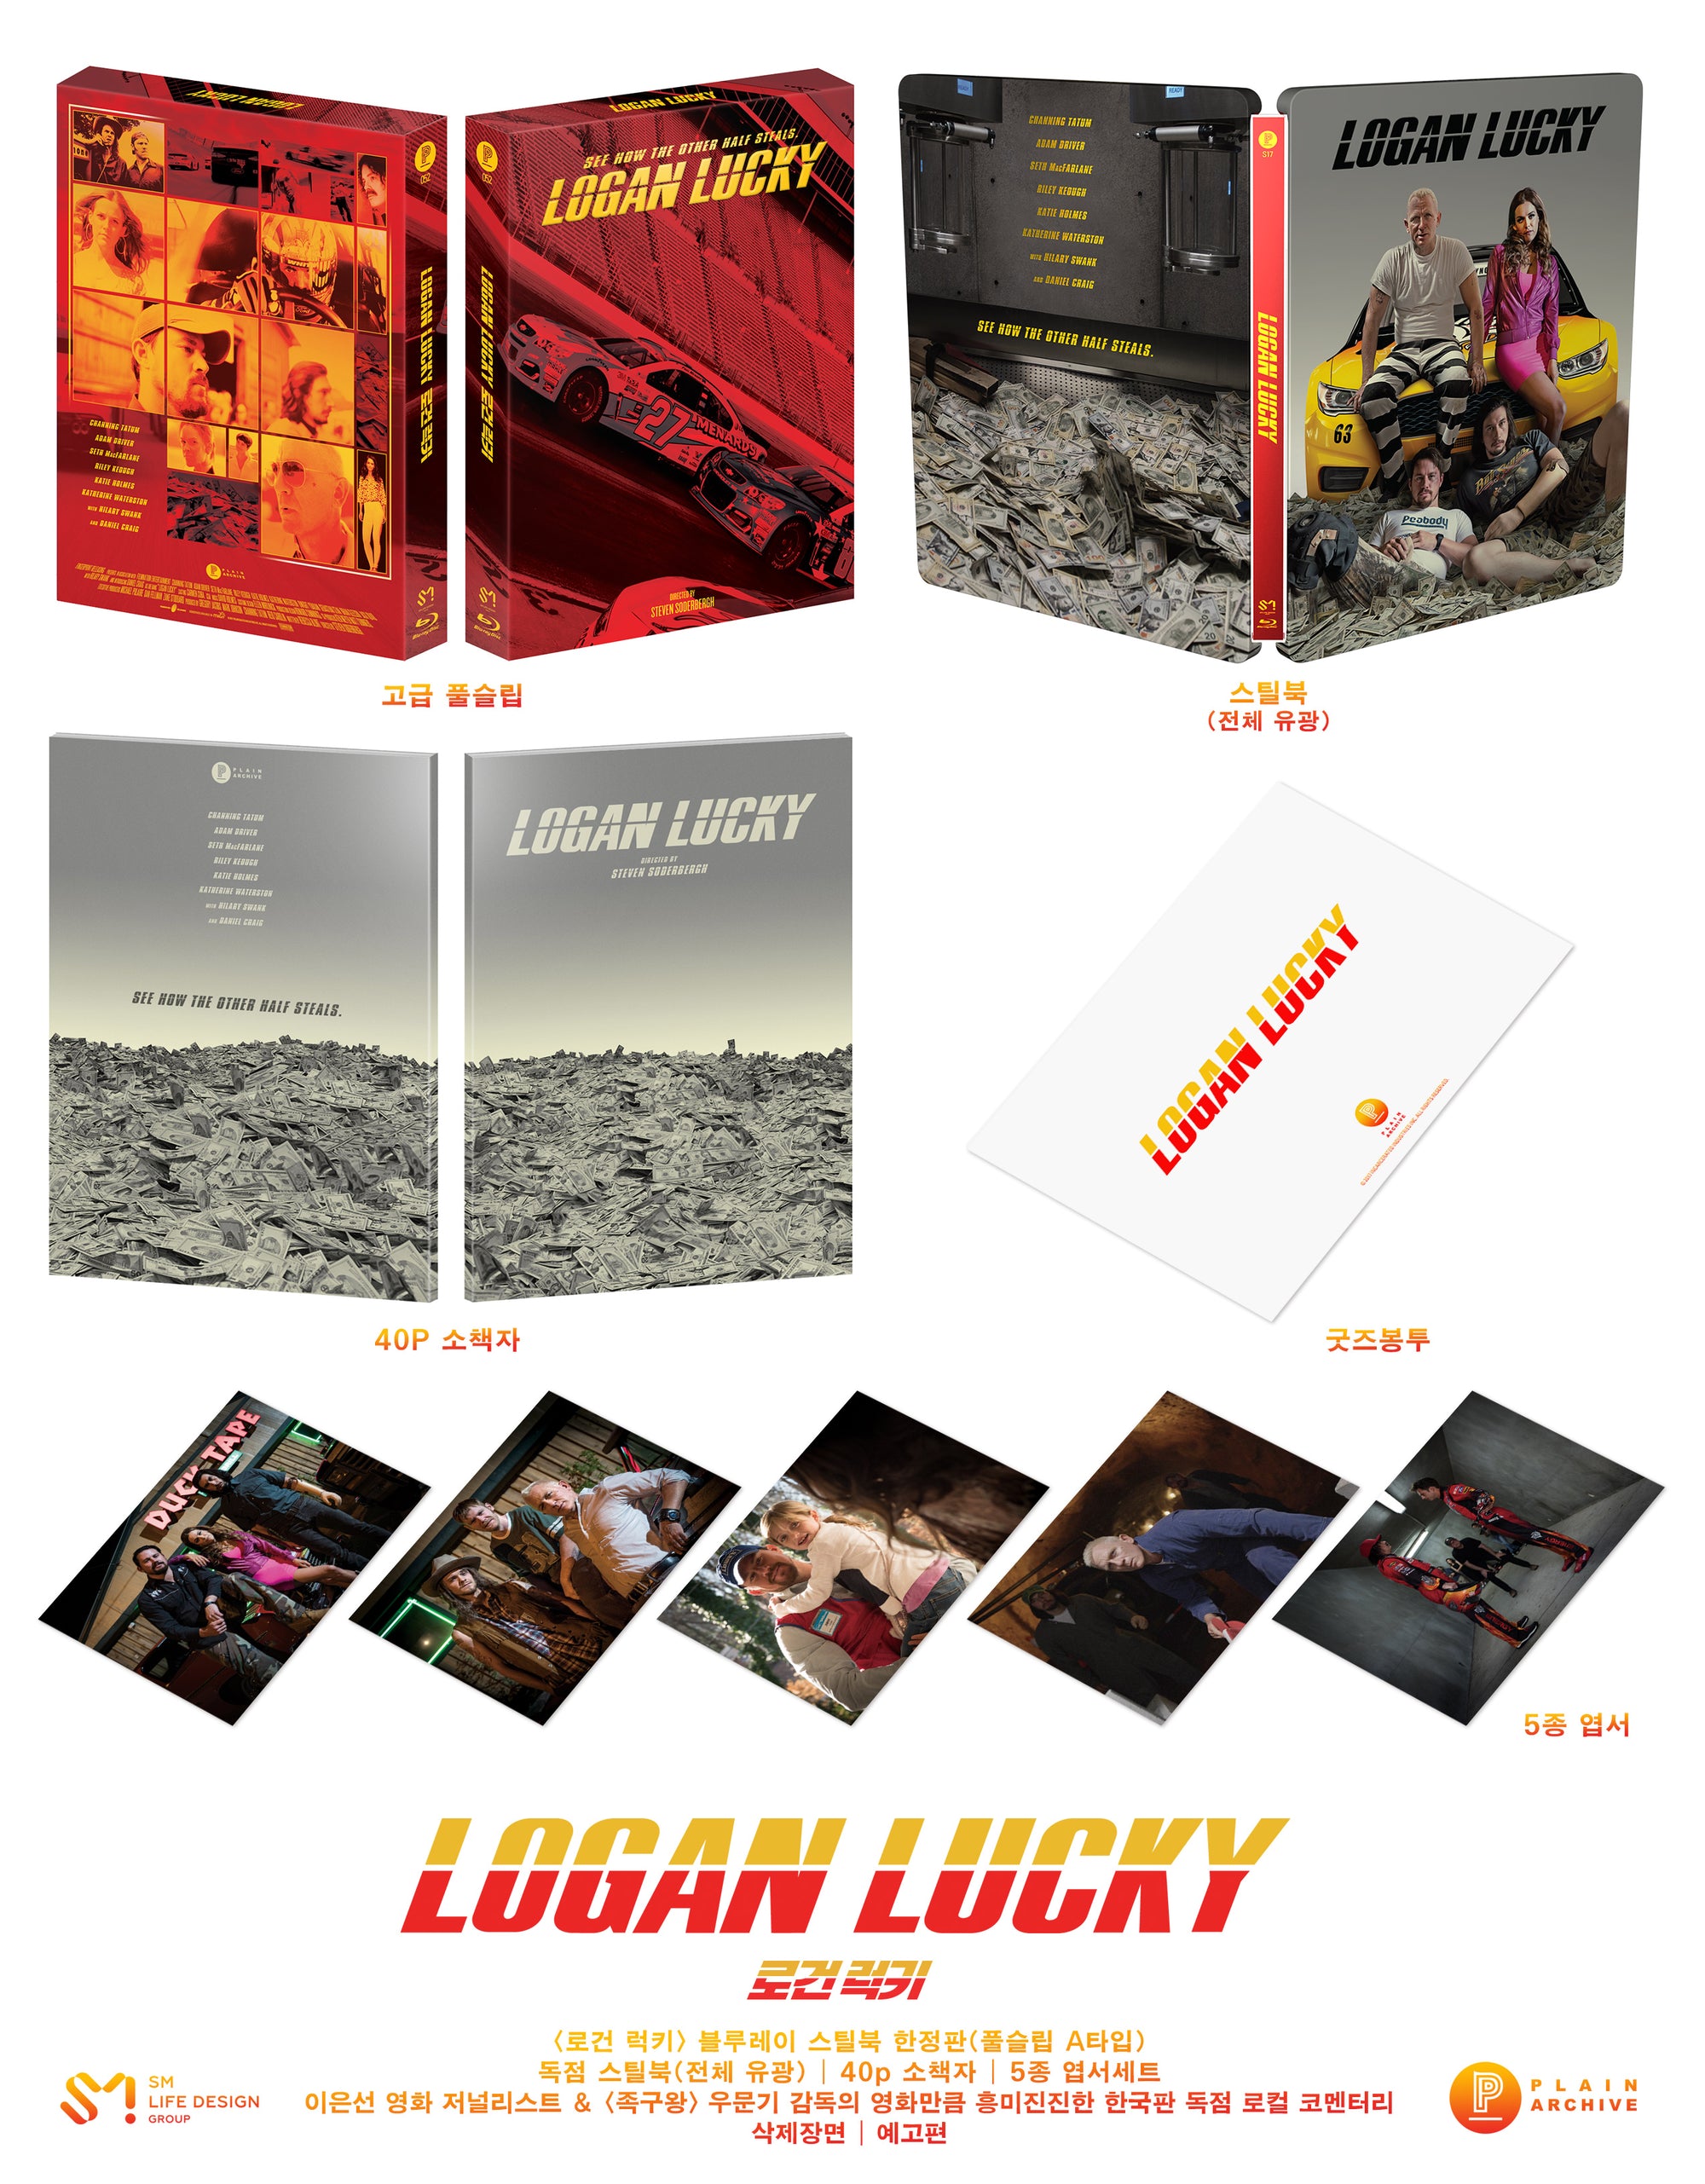 LOGAN LUCKY Blu-ray Steelbook: Dual Pack